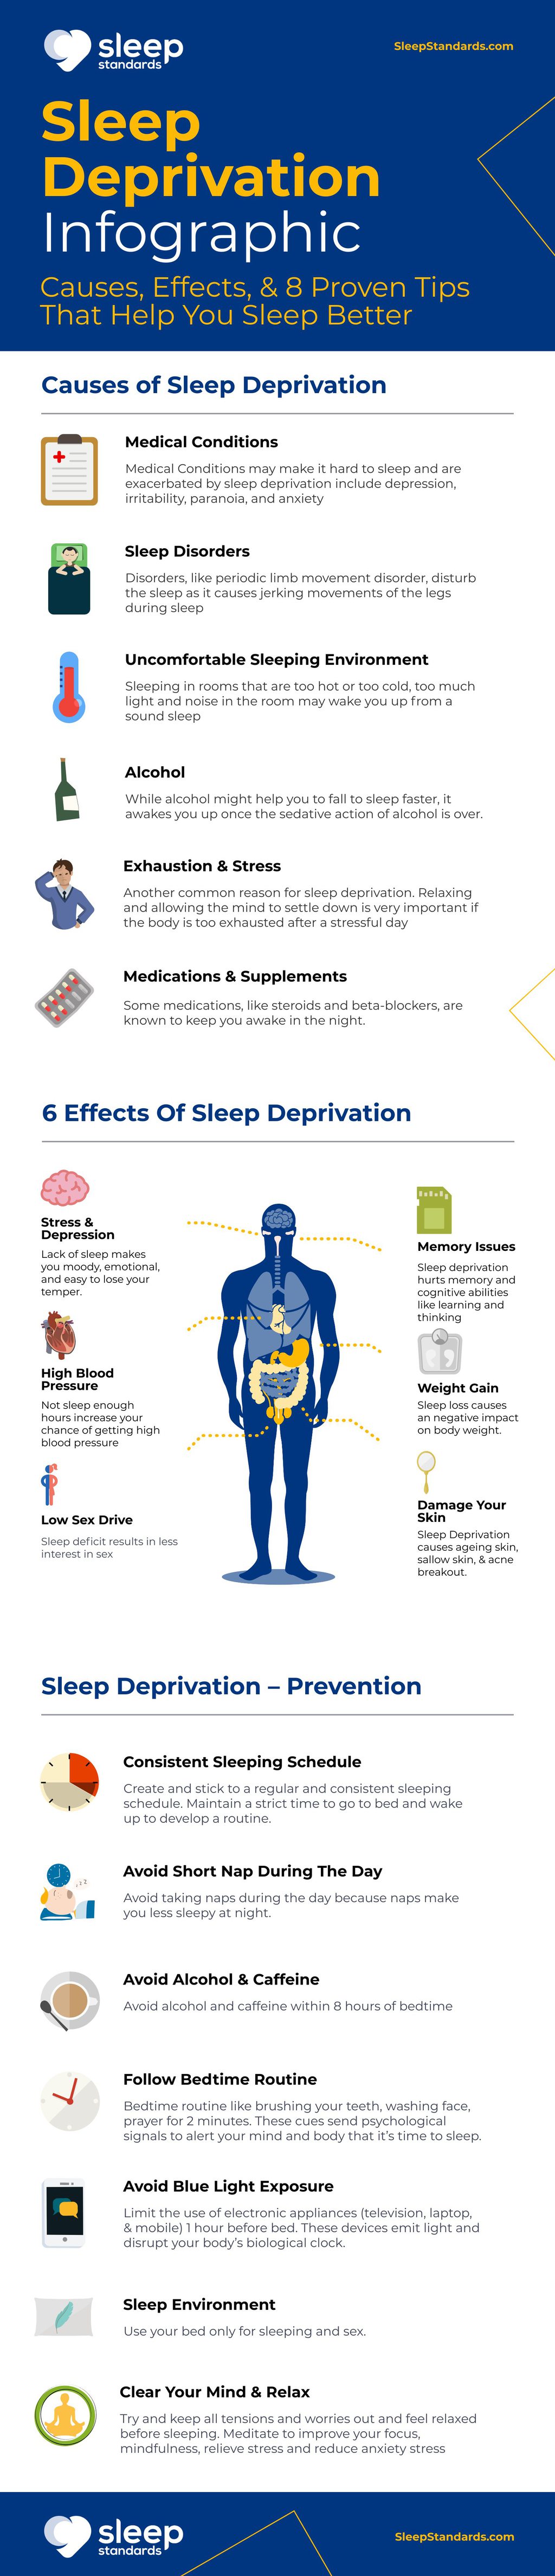 Sleep Deprivation Infographic